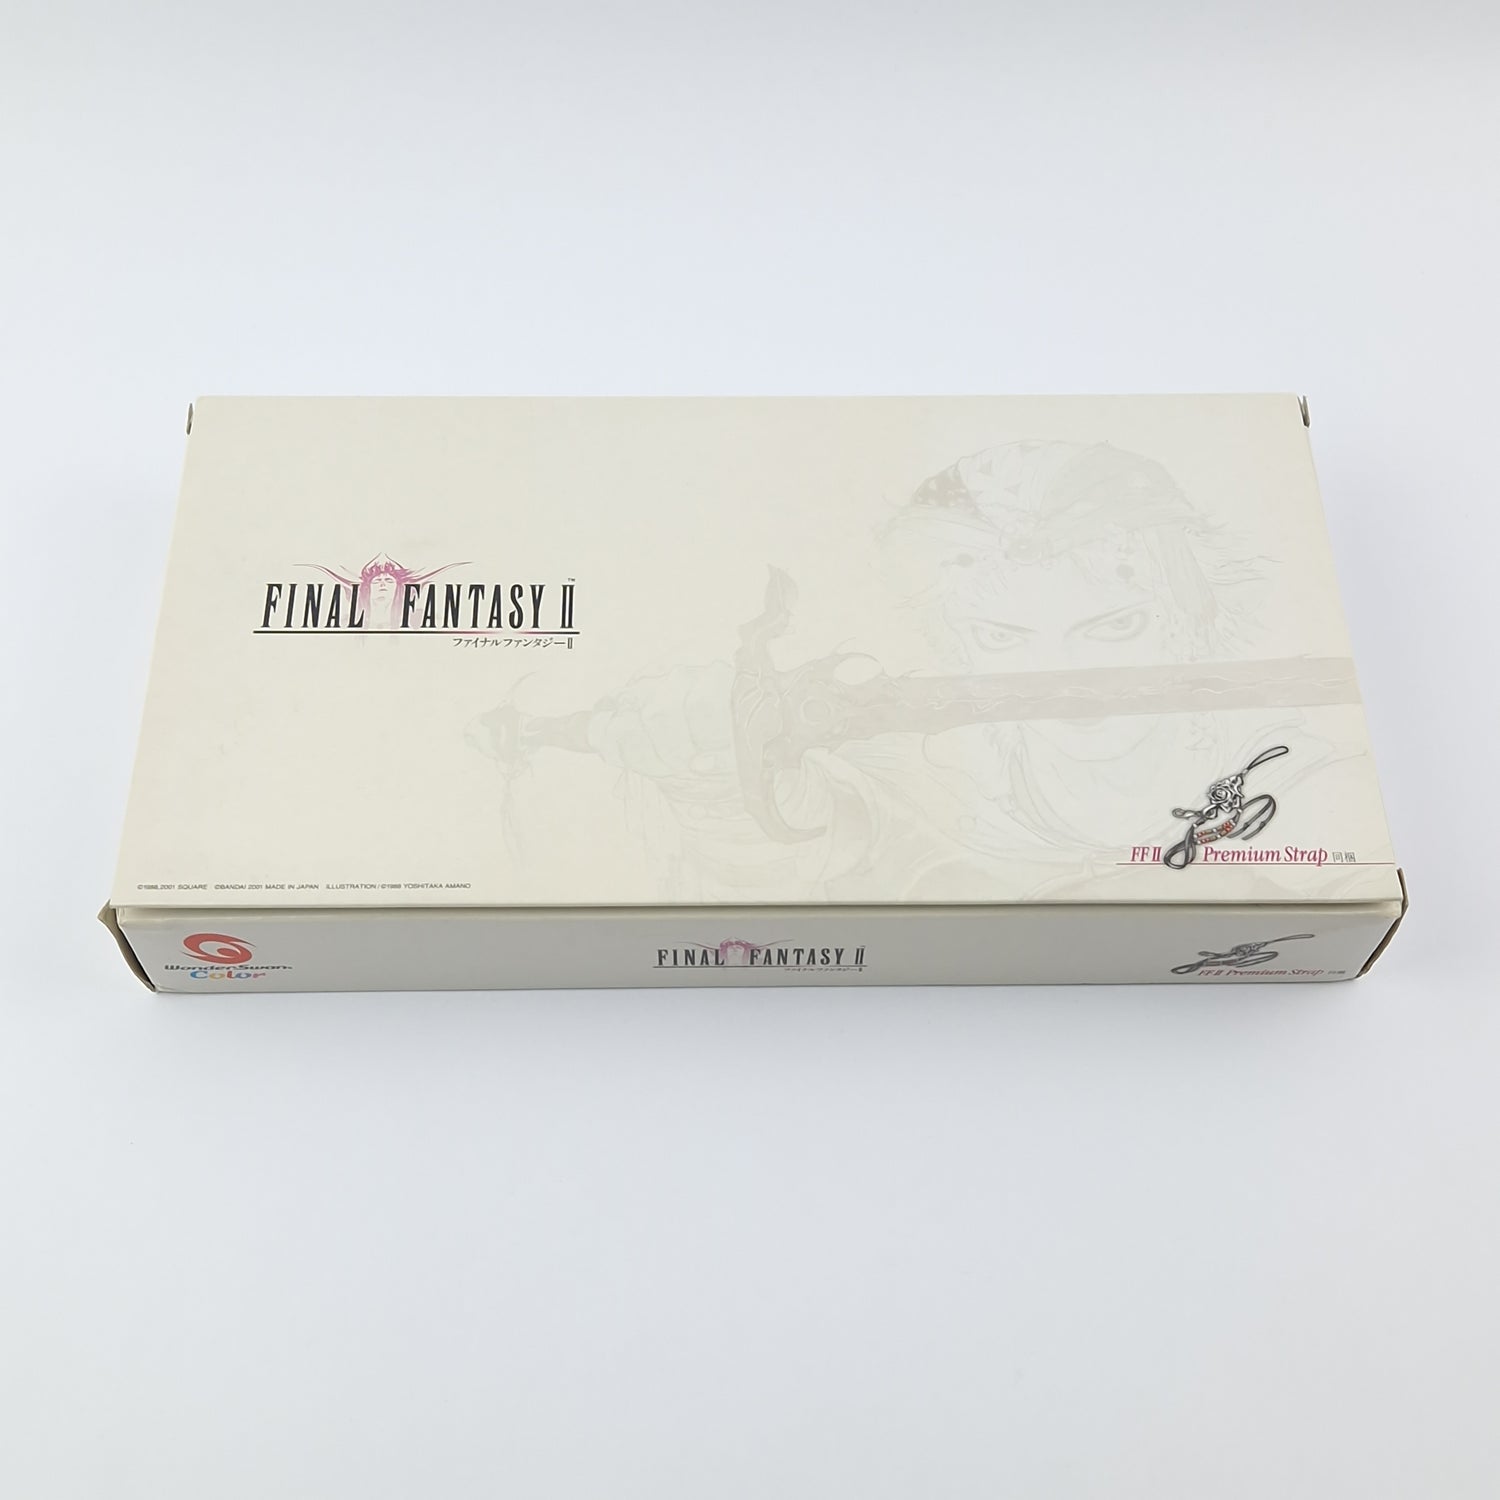 Bandai Wonderswan Color Console: Final Fantasy II Limited Edition - OVP JAPAN